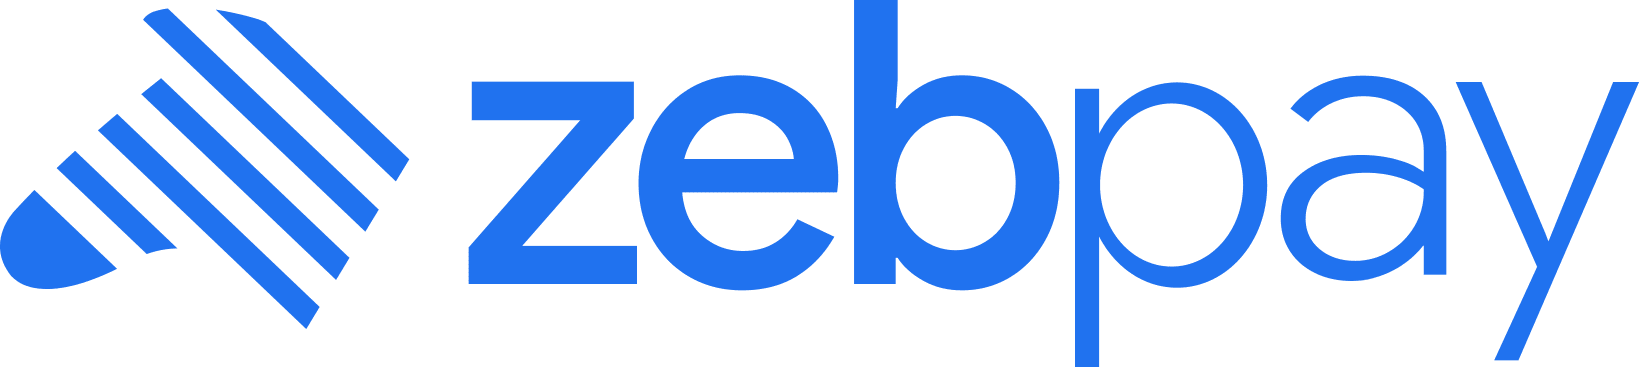 zebpay logo